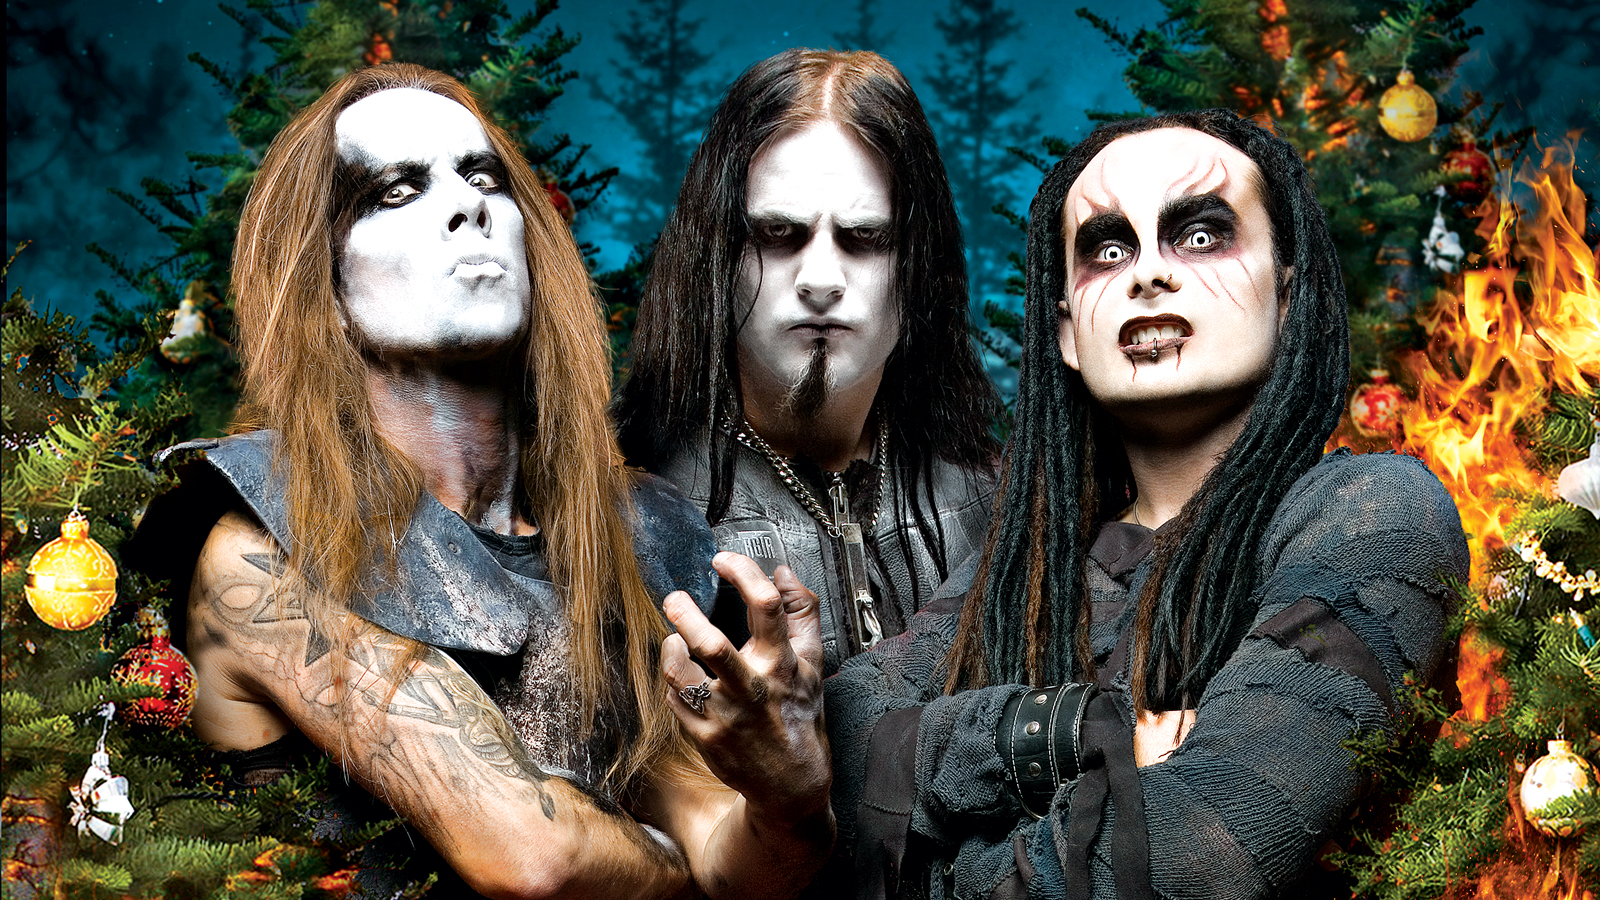 DIMMU BORGIR: black metal or not?